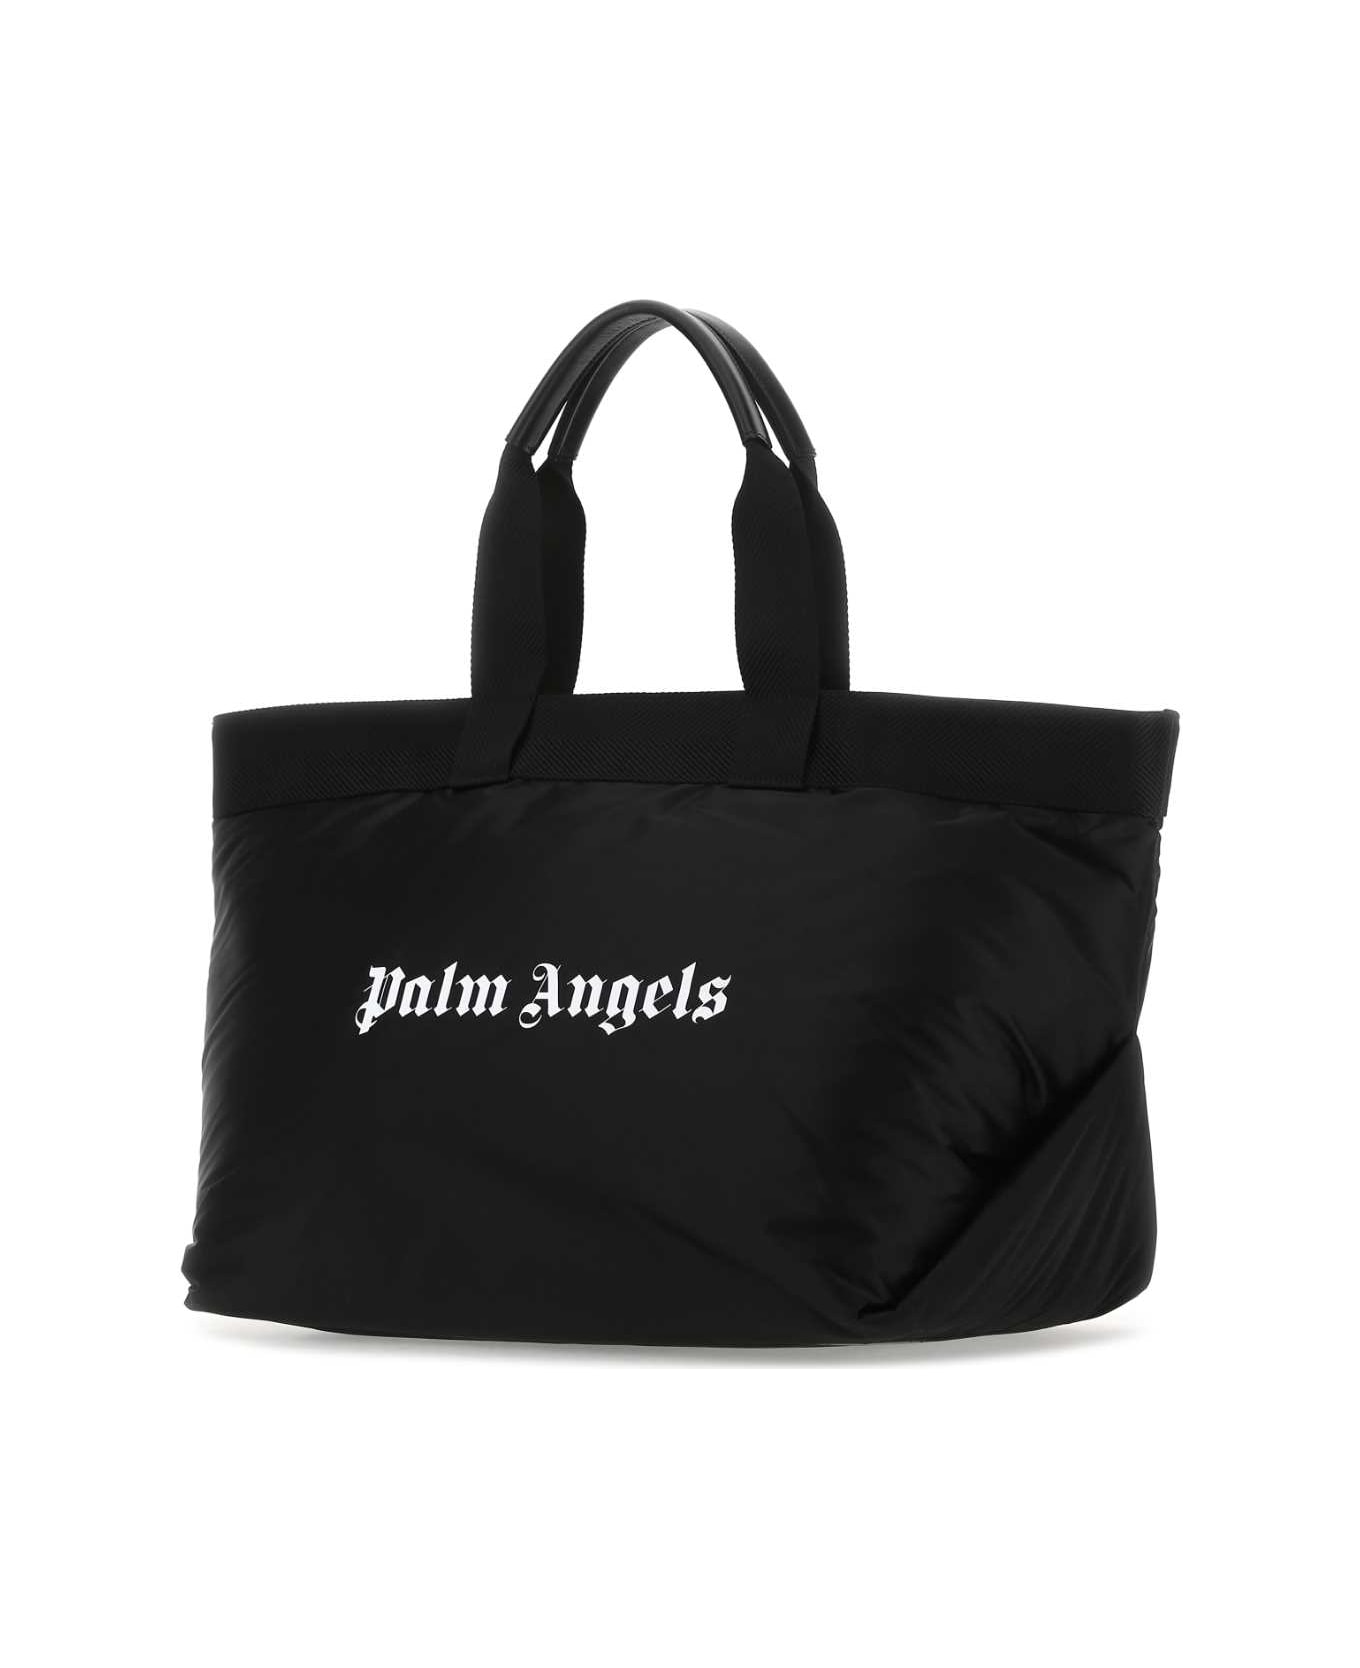 Palm Angels Black Fabric Shopping Bag - 1001 トートバッグ